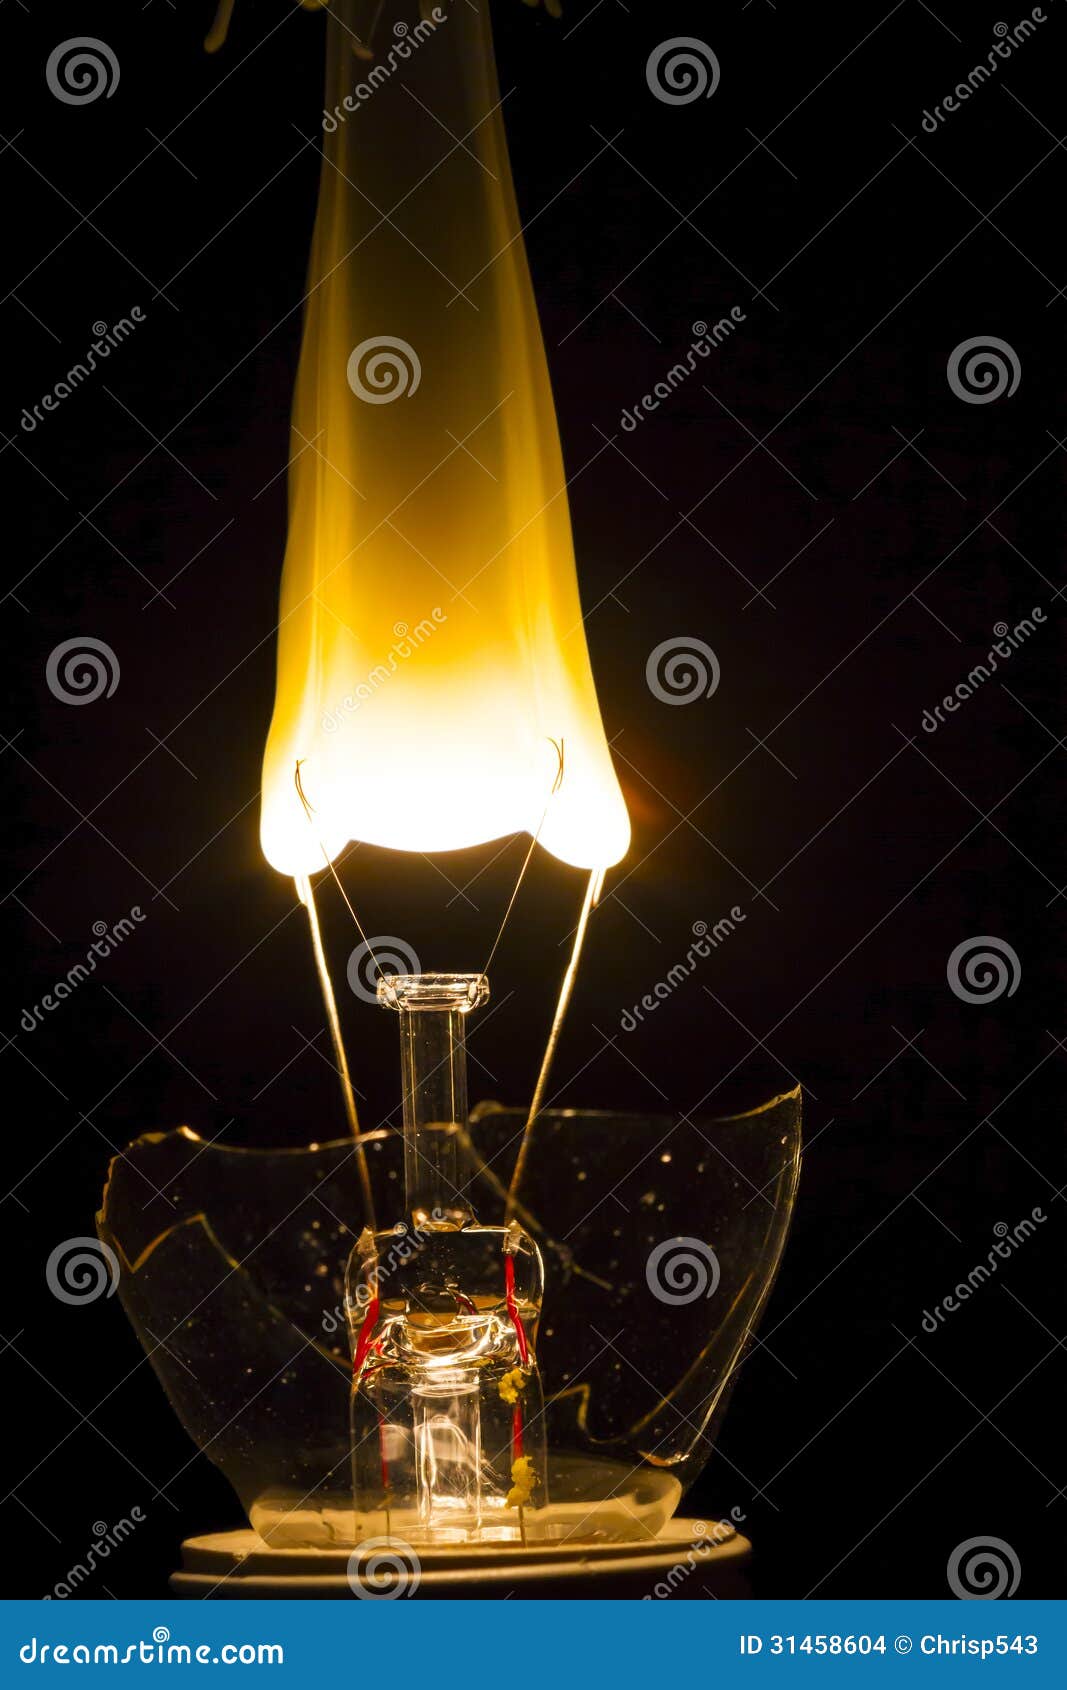 broken lightbulb with filament bursting into flame